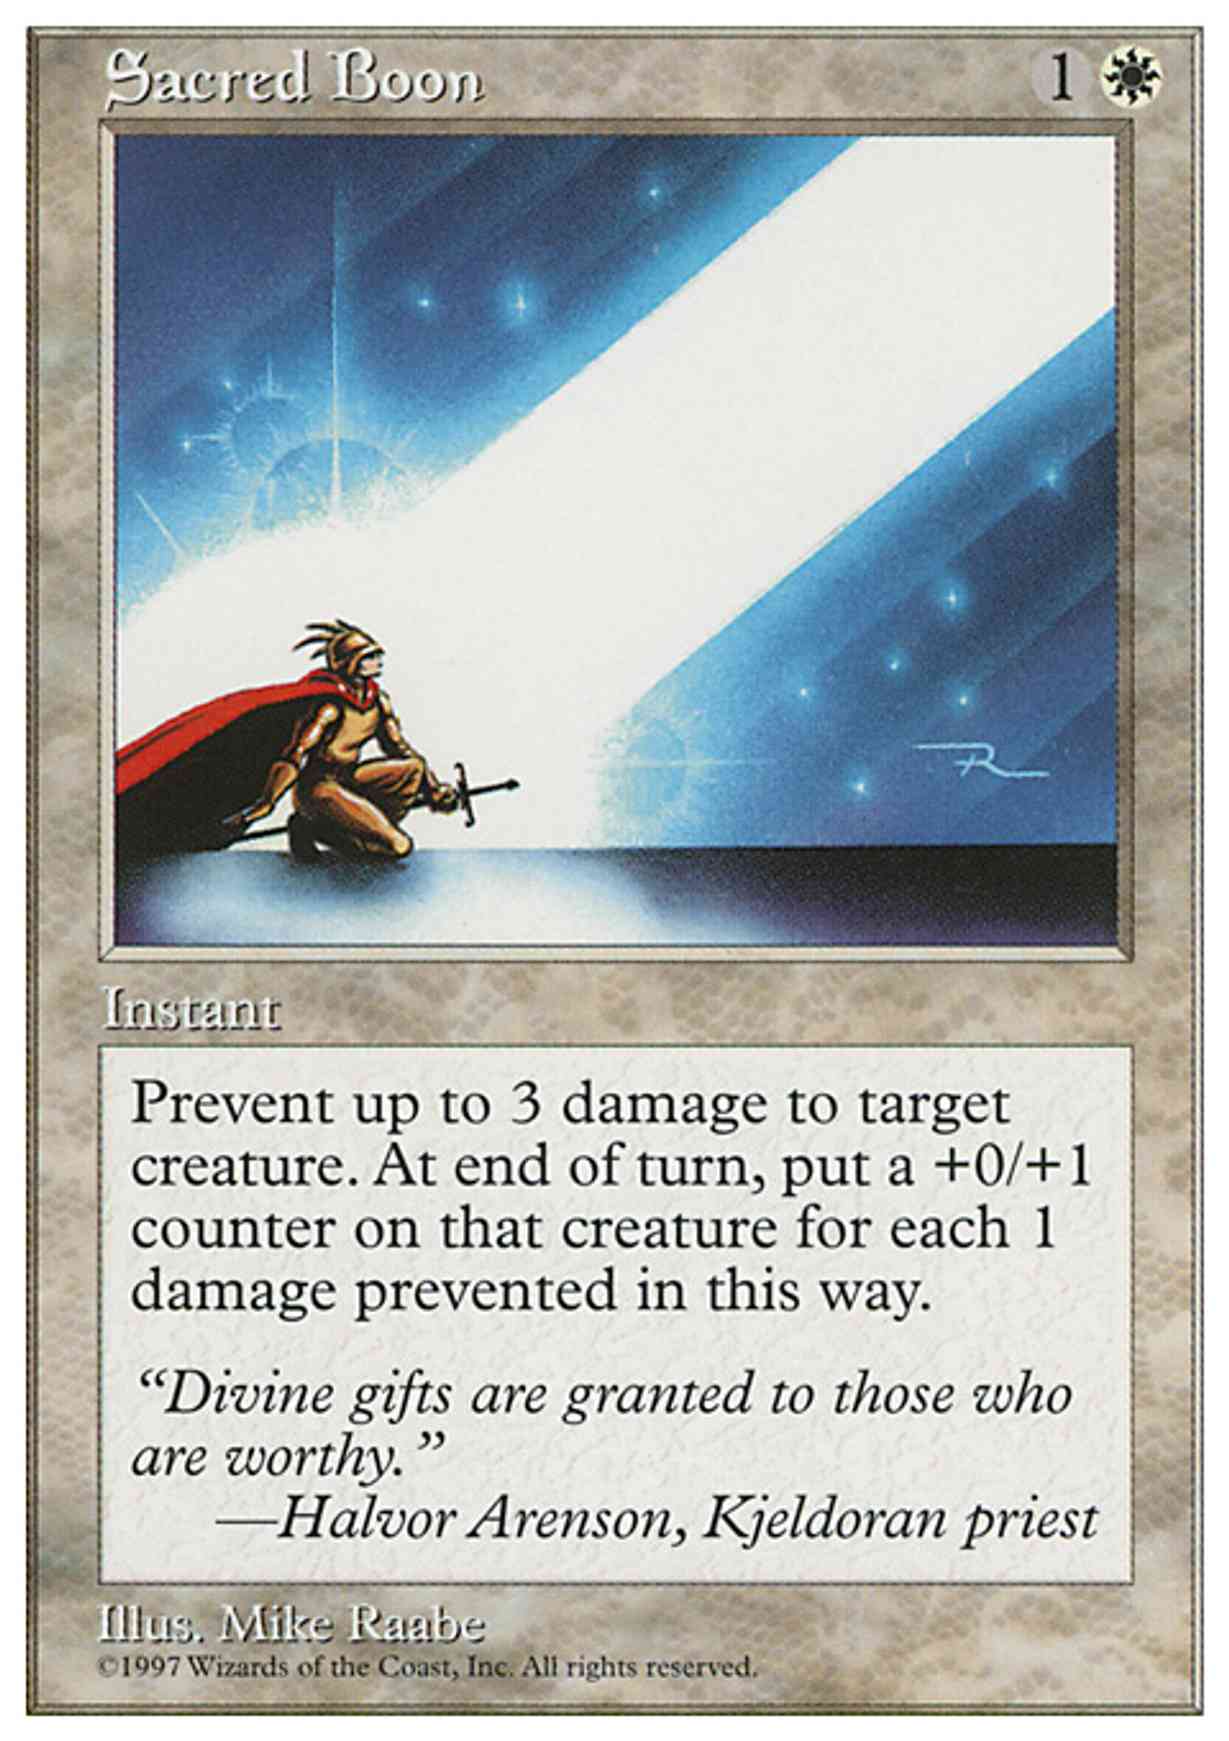 Sacred Boon magic card front